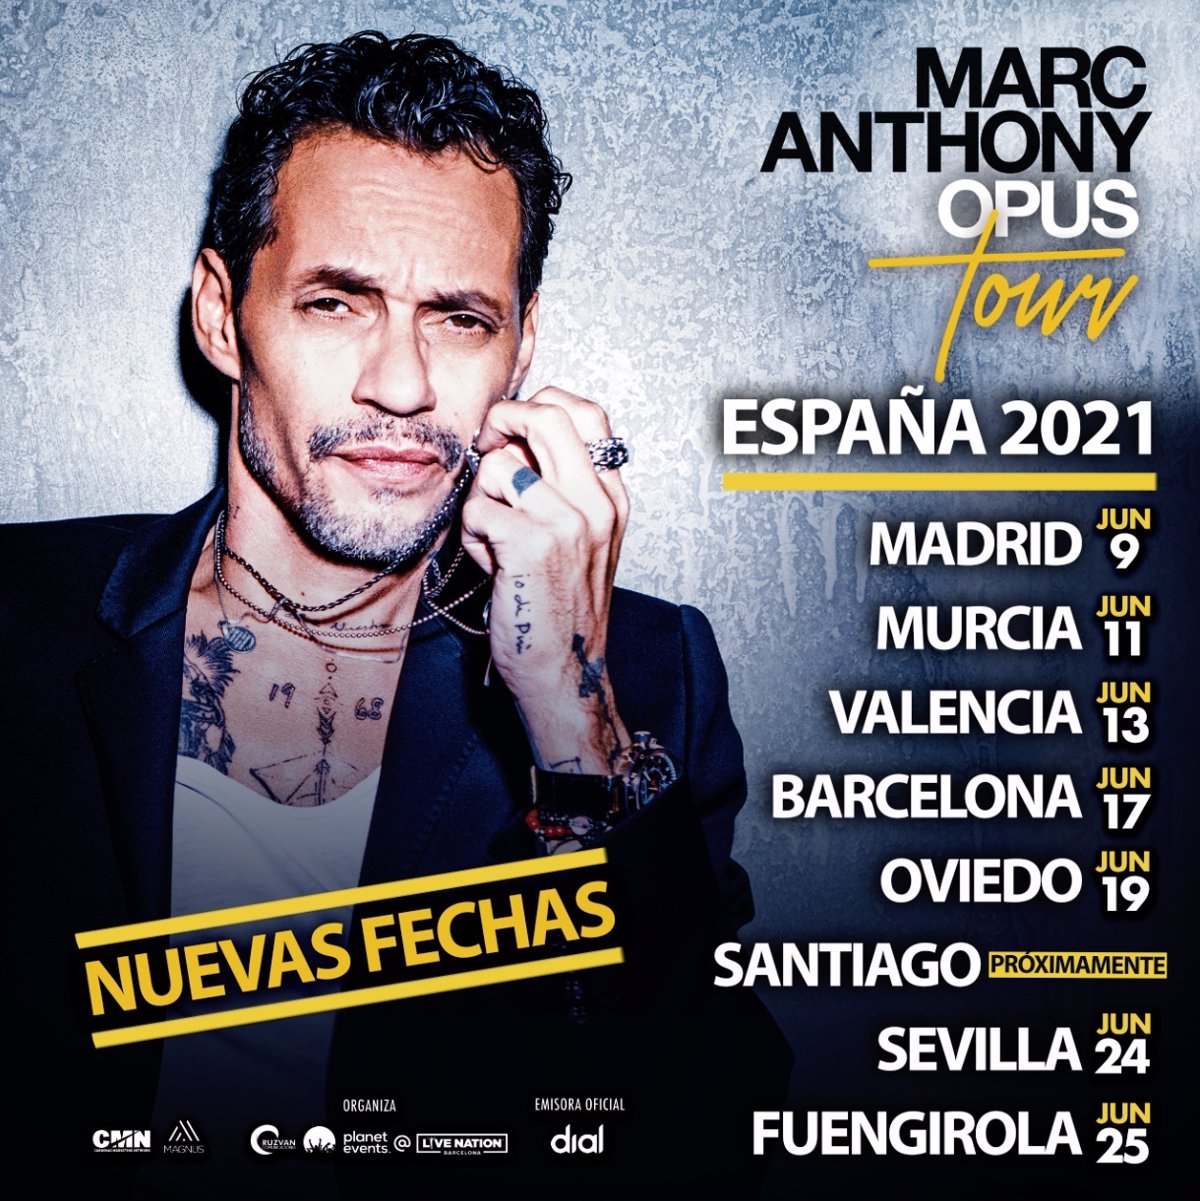 Marc Anthony retrasa su gira española hasta 2021